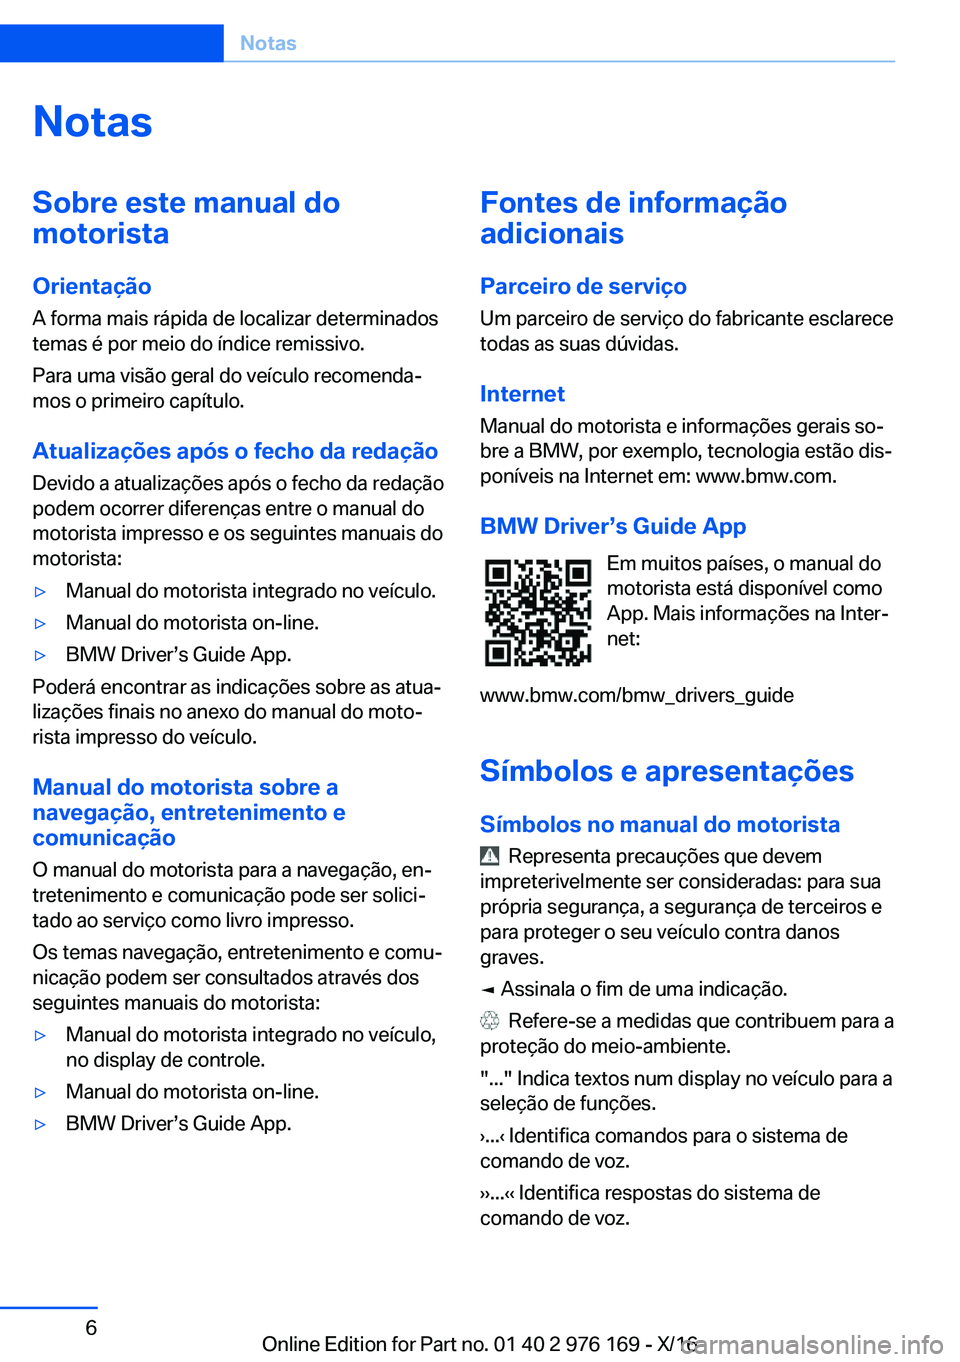 BMW X5 M 2017  Manual do condutor (in Portuguese) �N�o�t�a�s�S�o�b�r�e��e�s�t�e��m�a�n�u�a�l��d�o
�m�o�t�o�r�i�s�t�a
�O�r�i�e�n�t�a�